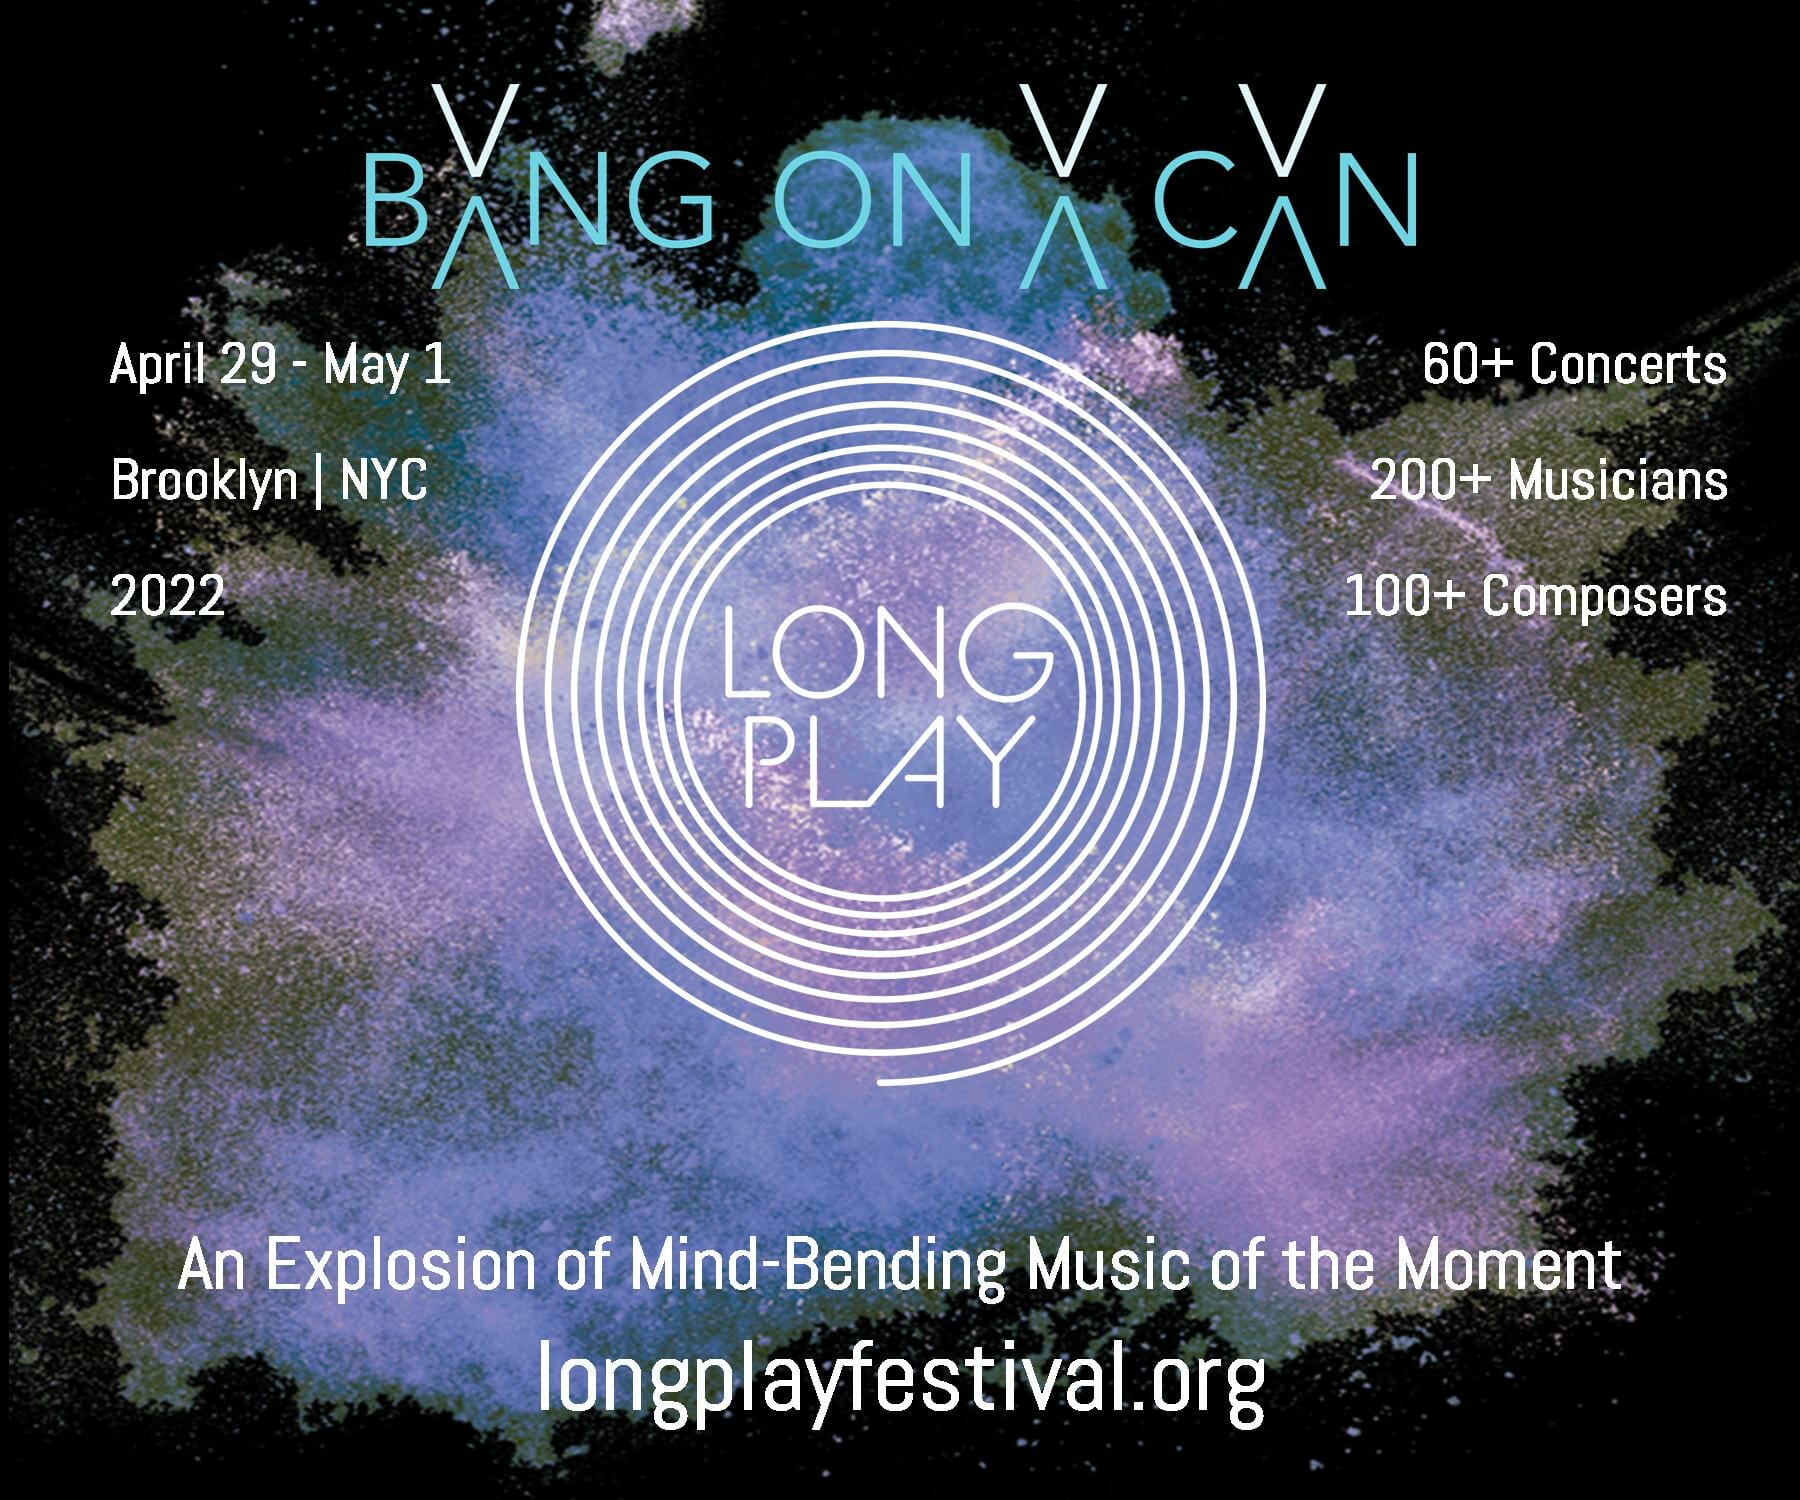 Comienza el Festival Long Play de Bang on a Can Minimalismore